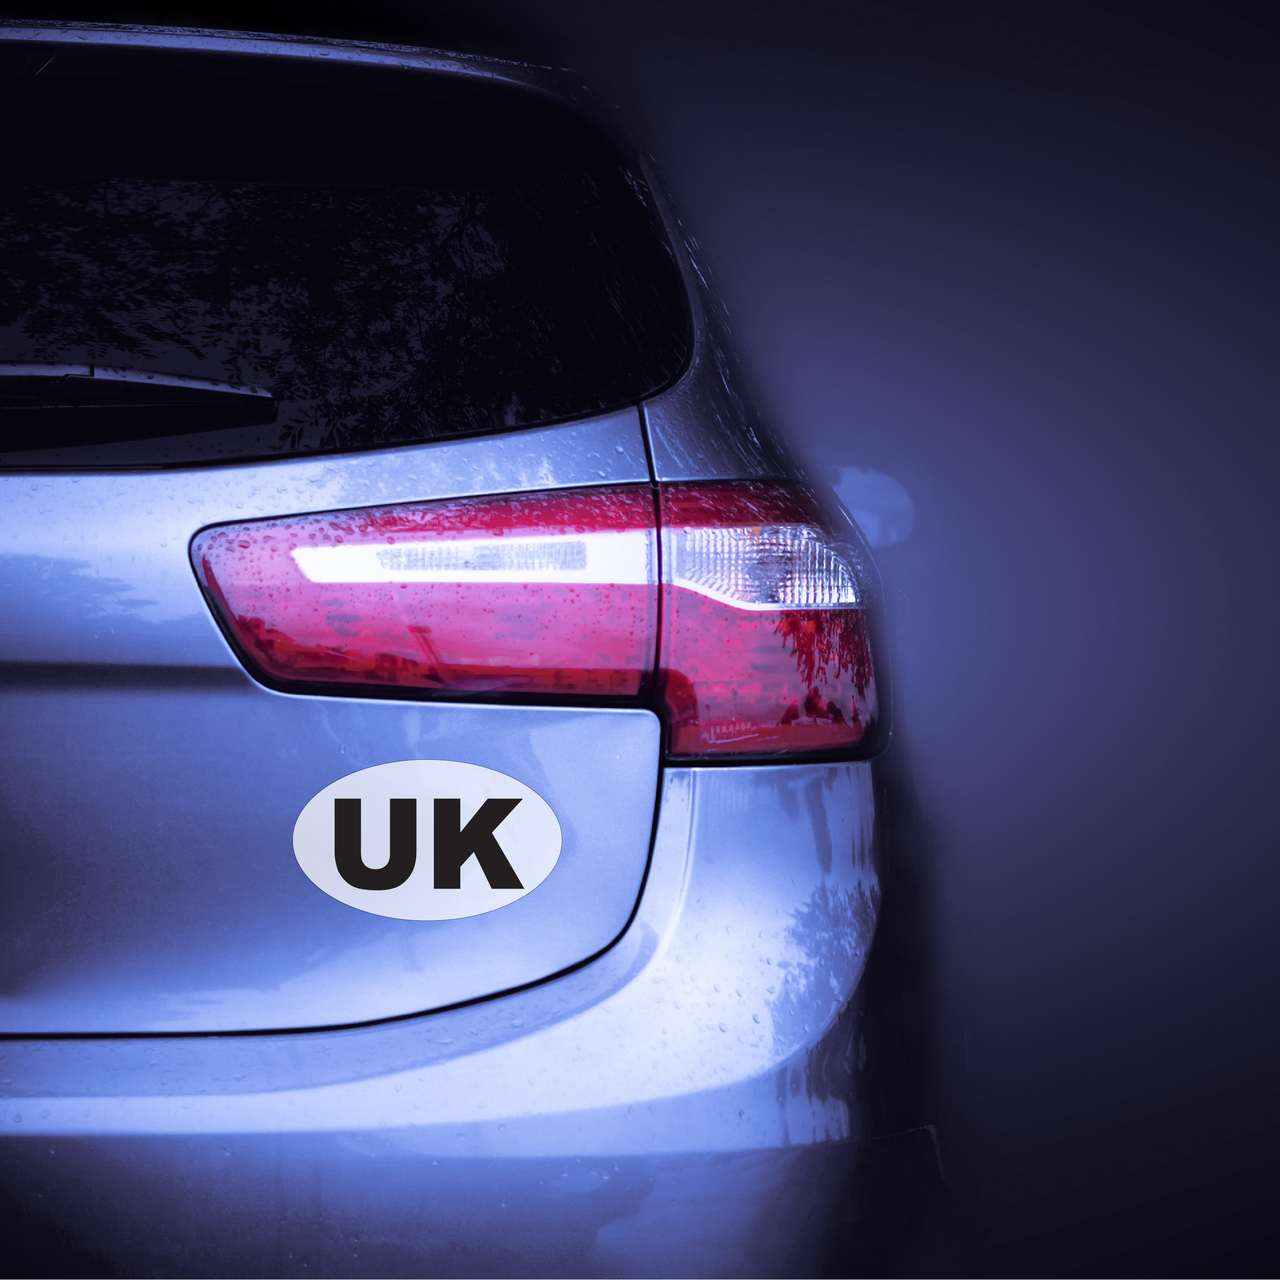 UK (European Standard) Car Decal